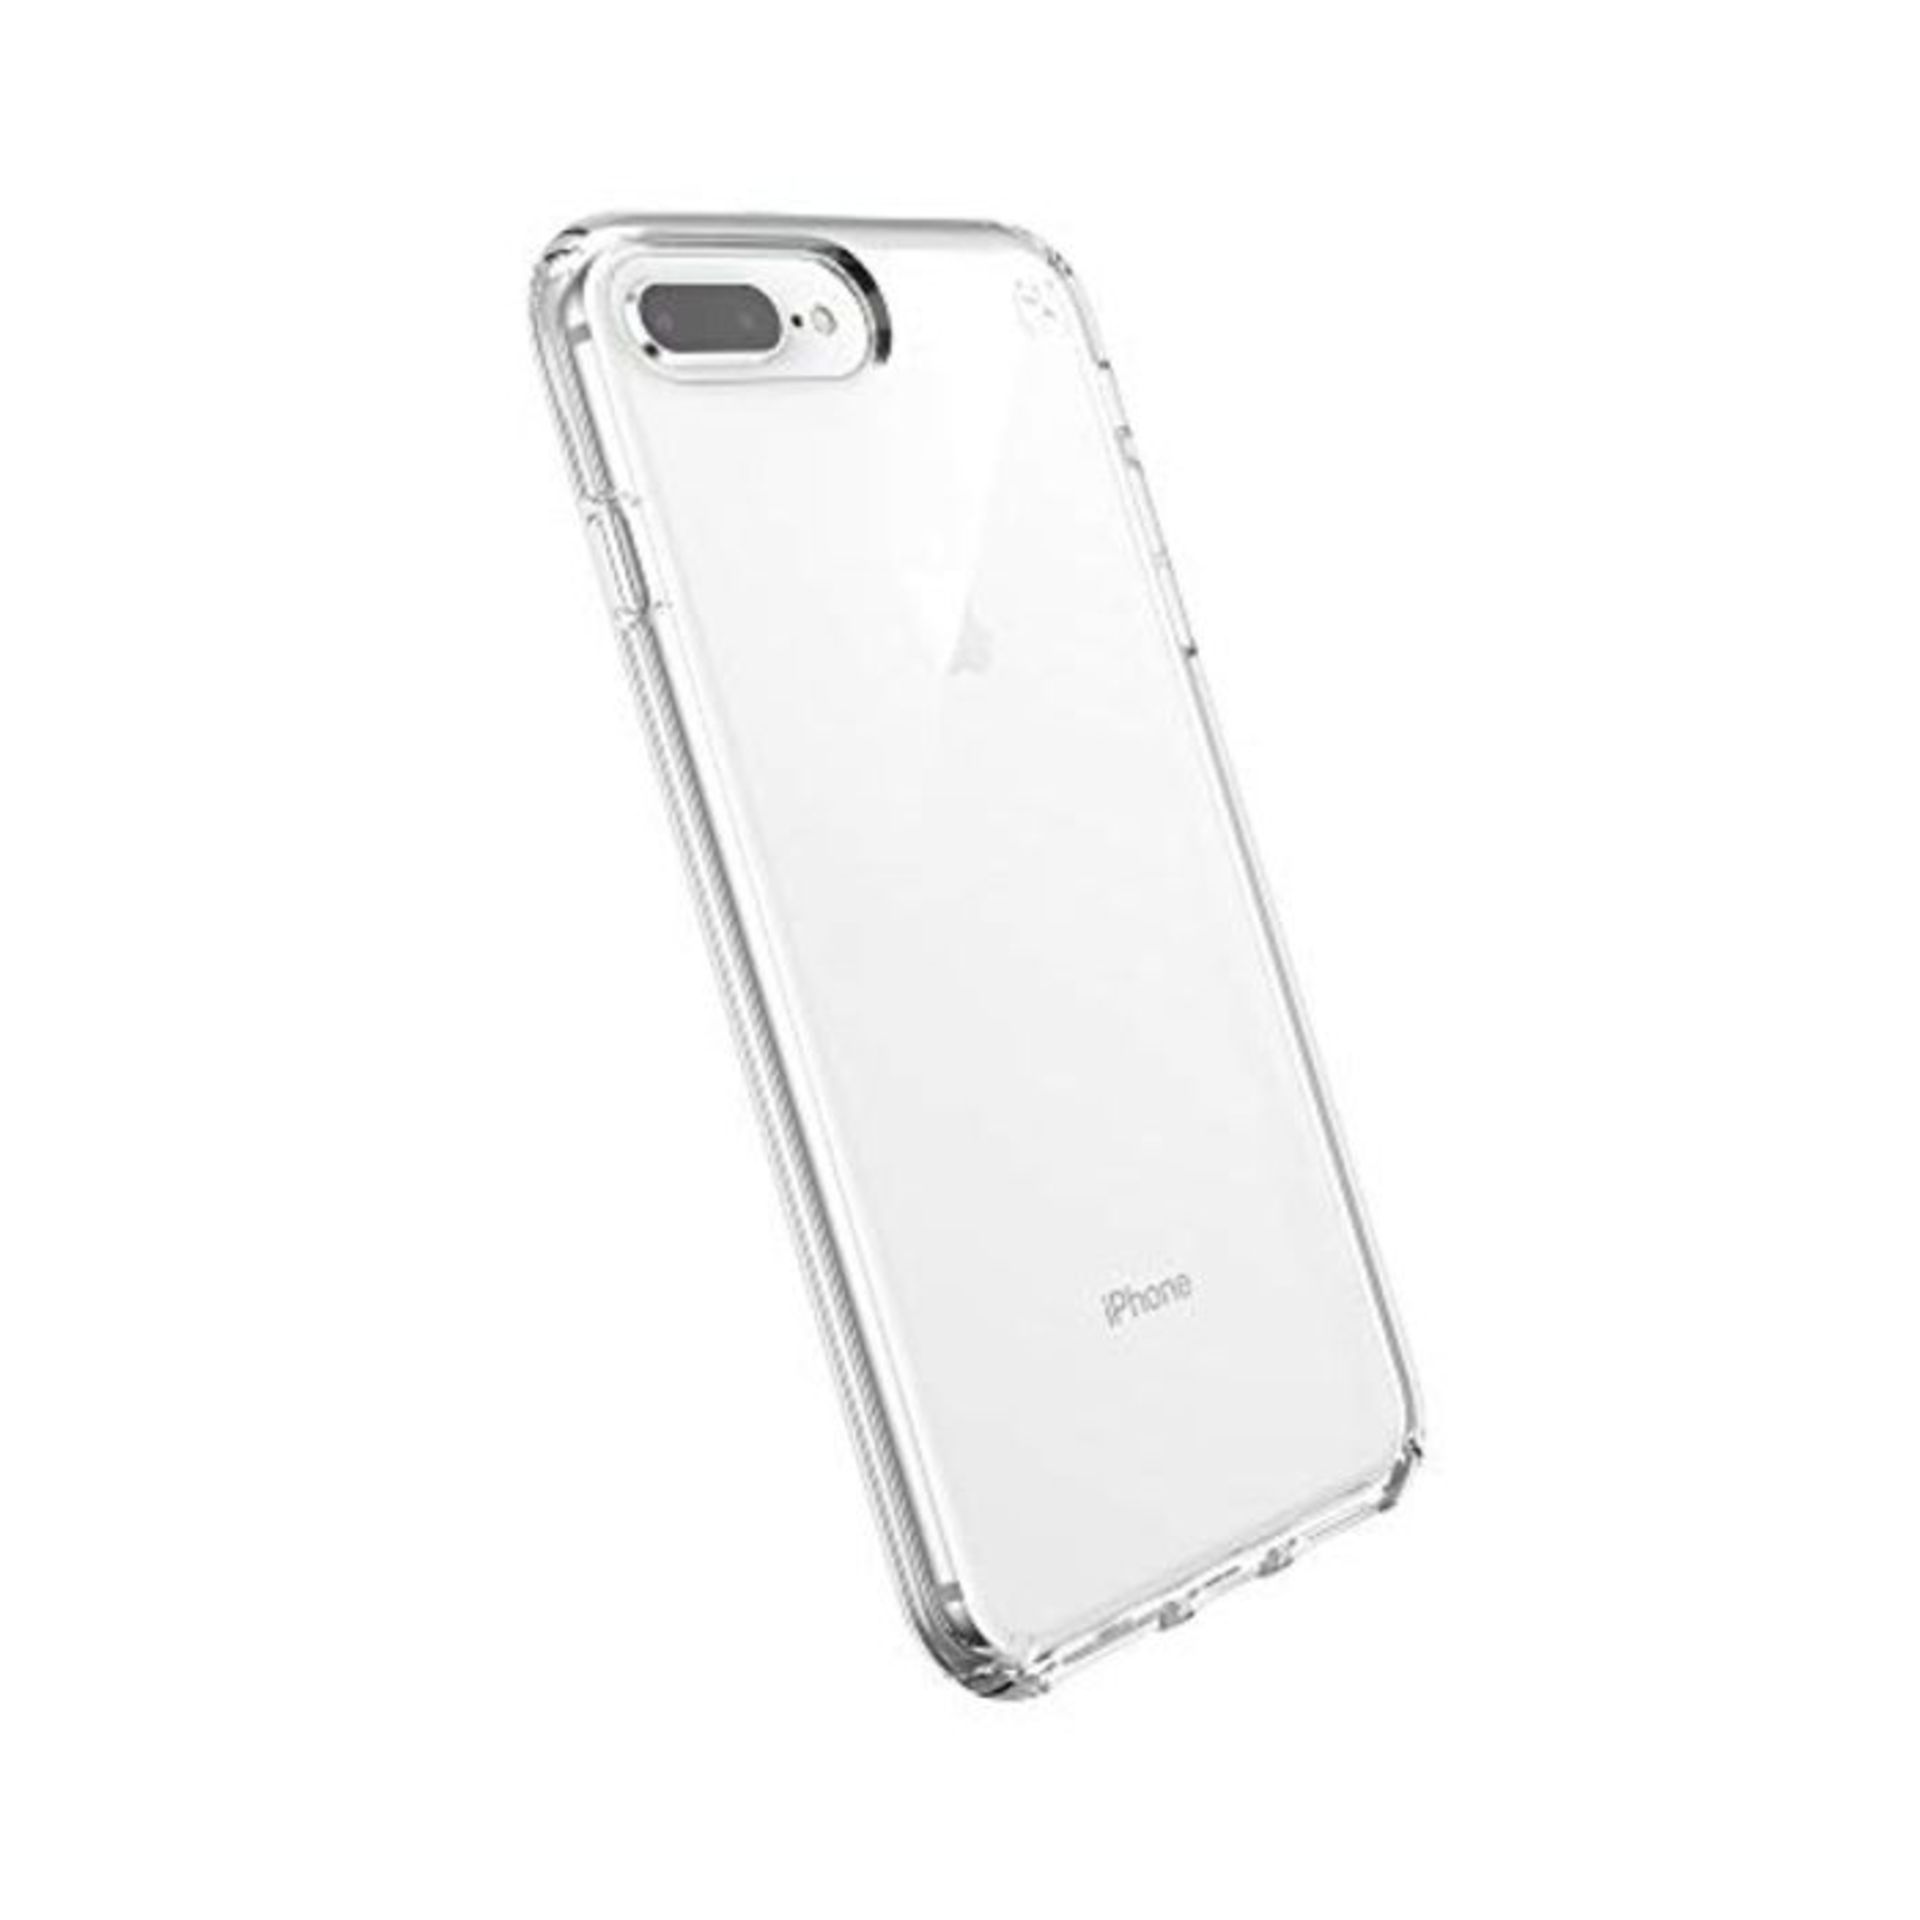 Speck iPhone 8 Plus Protective Ultra Thin Slim Hard Anti Scratch Presidio Clear Cover